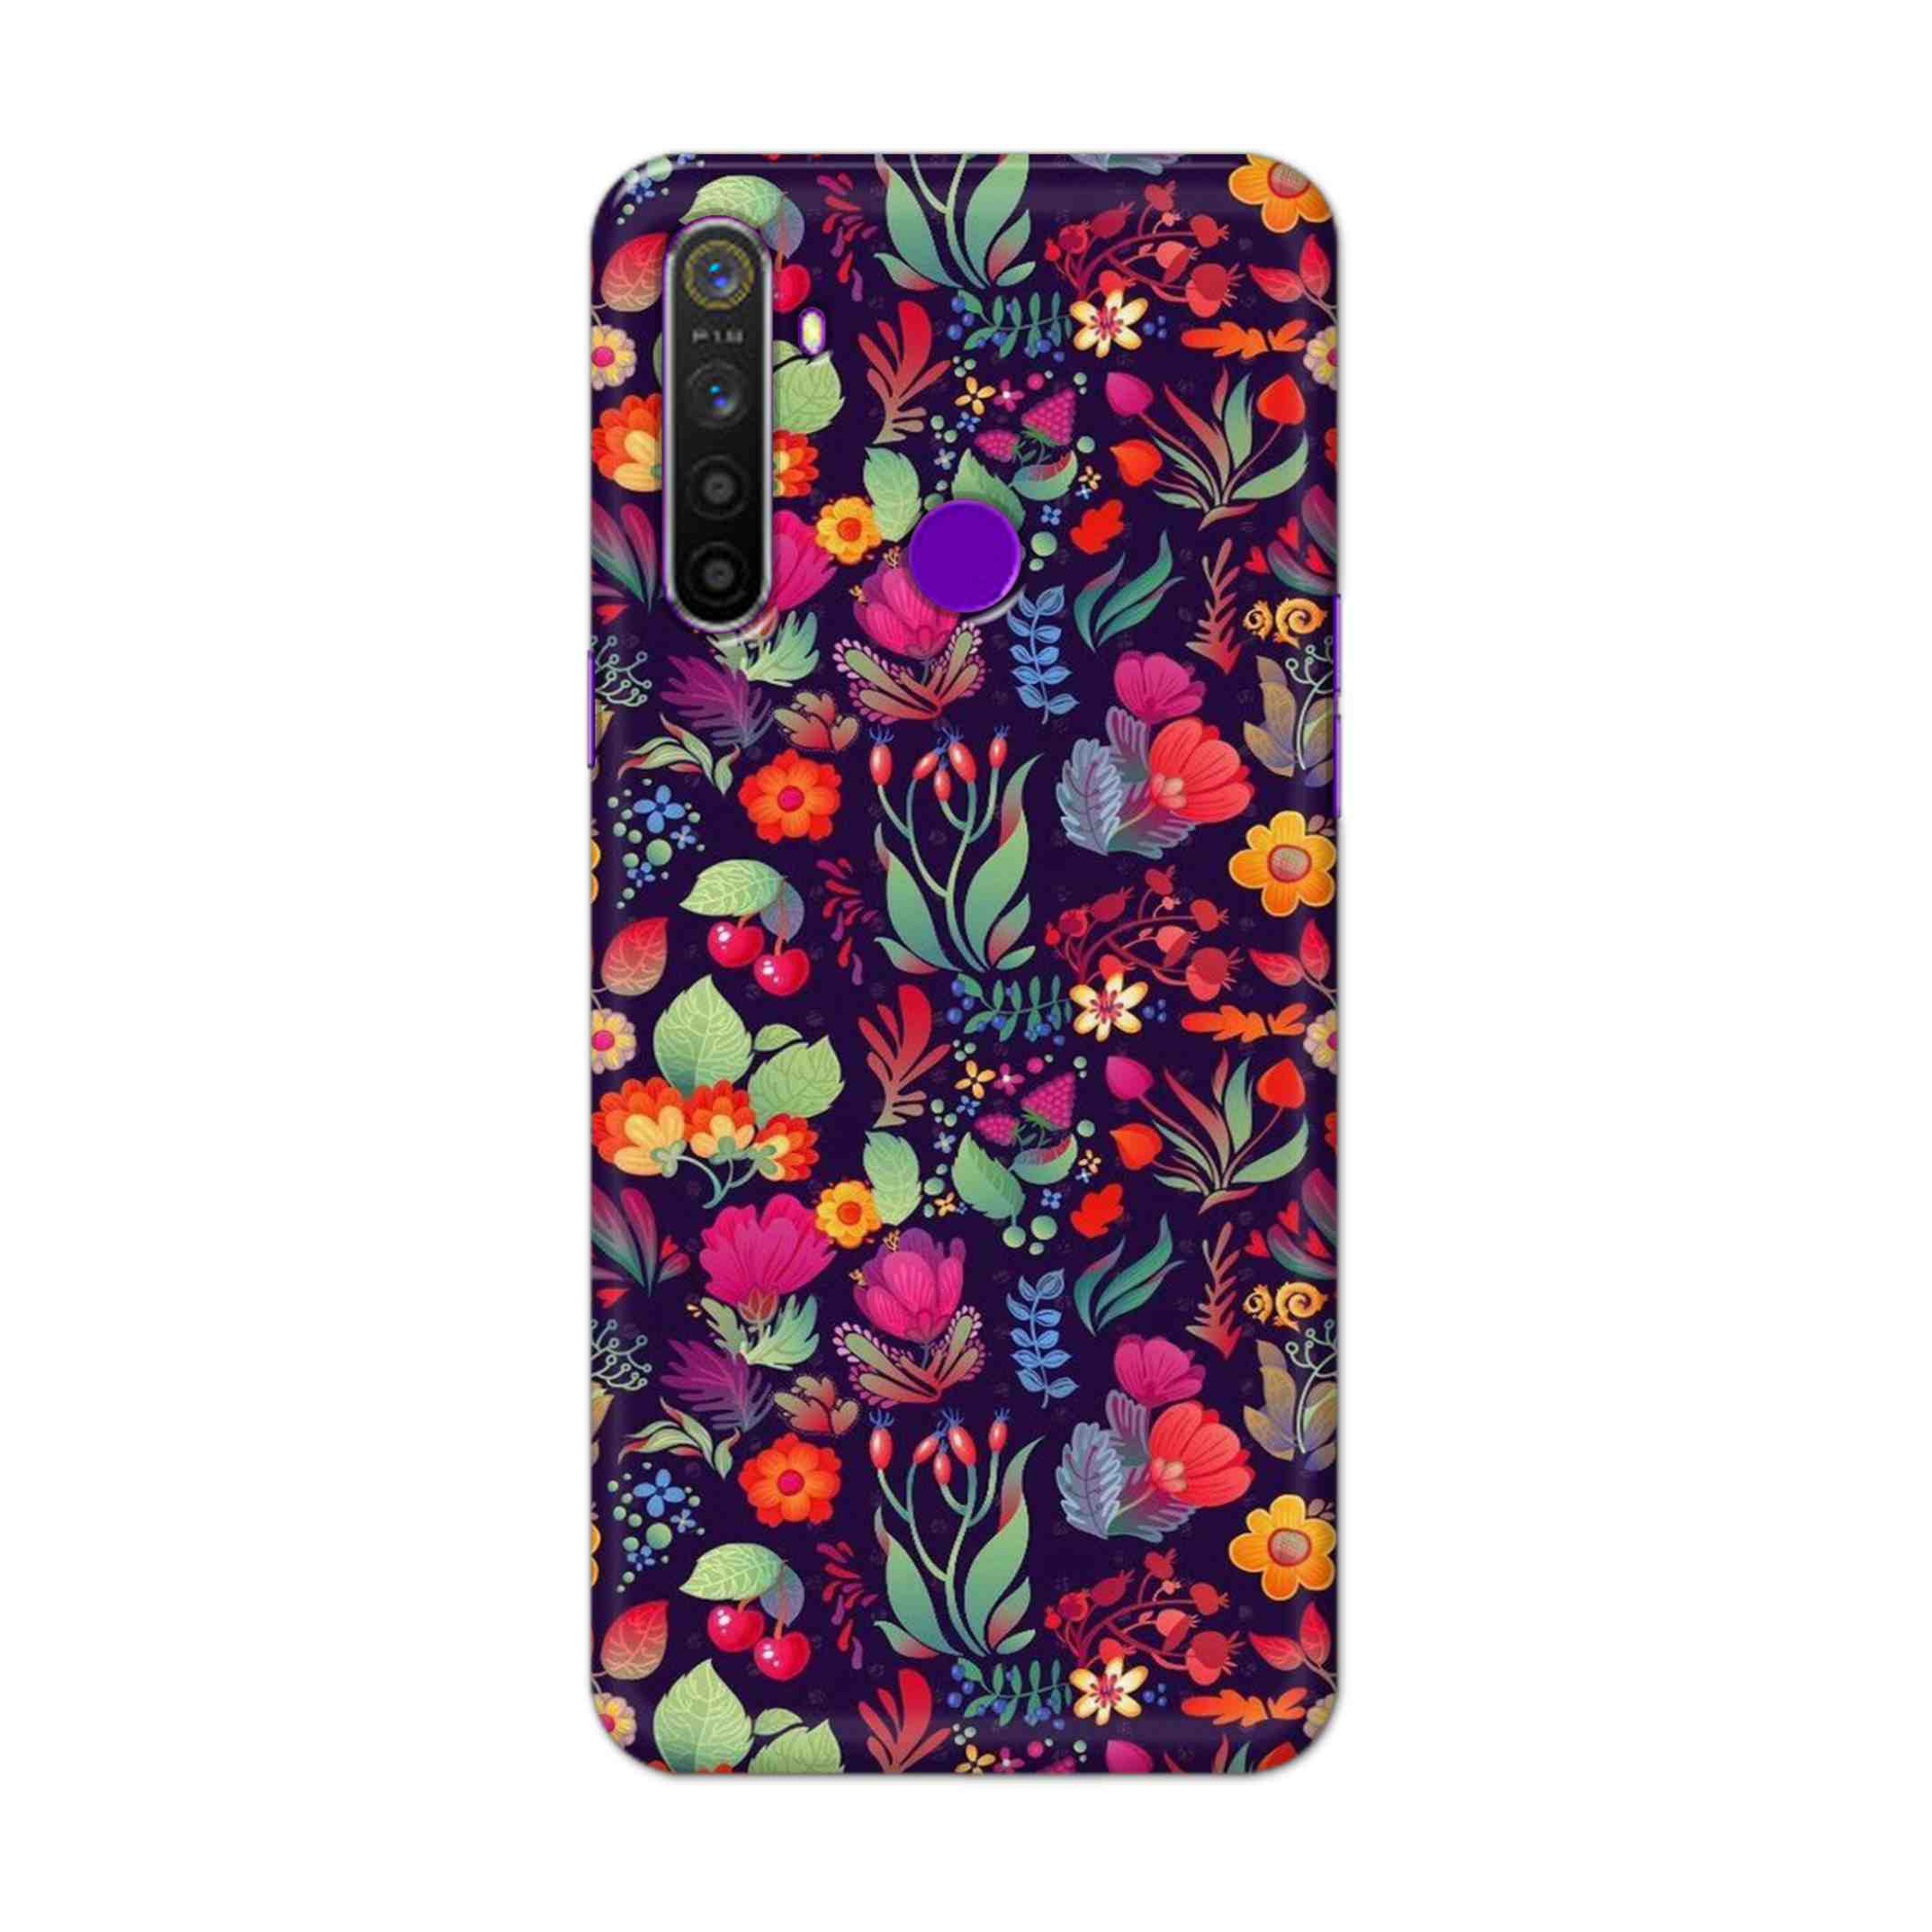 Buy Fruits Flower Hard Back Mobile Phone Case Cover For Realme 5 Online